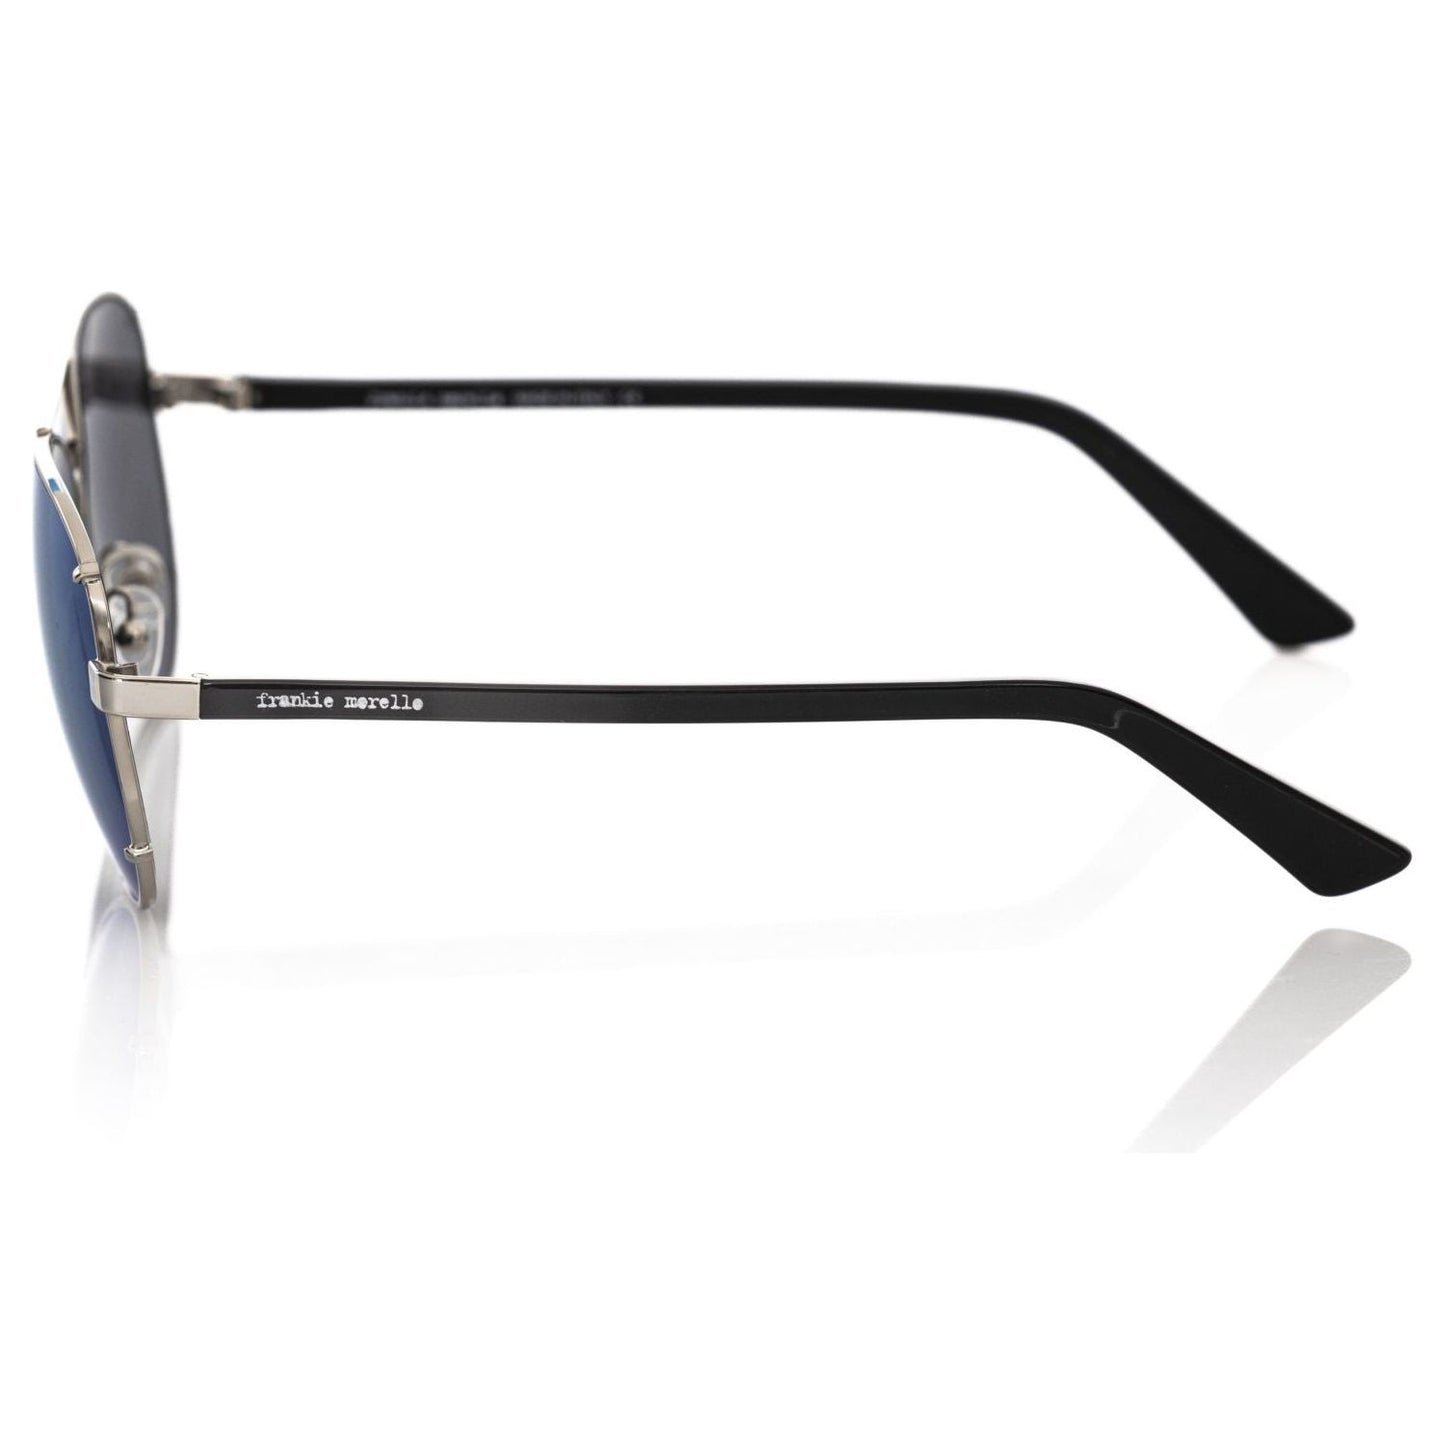 Frankie Morello Aviator-Style Metallic Frame Sunglasses silver-metallic-fibre-sunglasses-2 product-22123-818675123-scaled-4e9920be-4e6.jpg